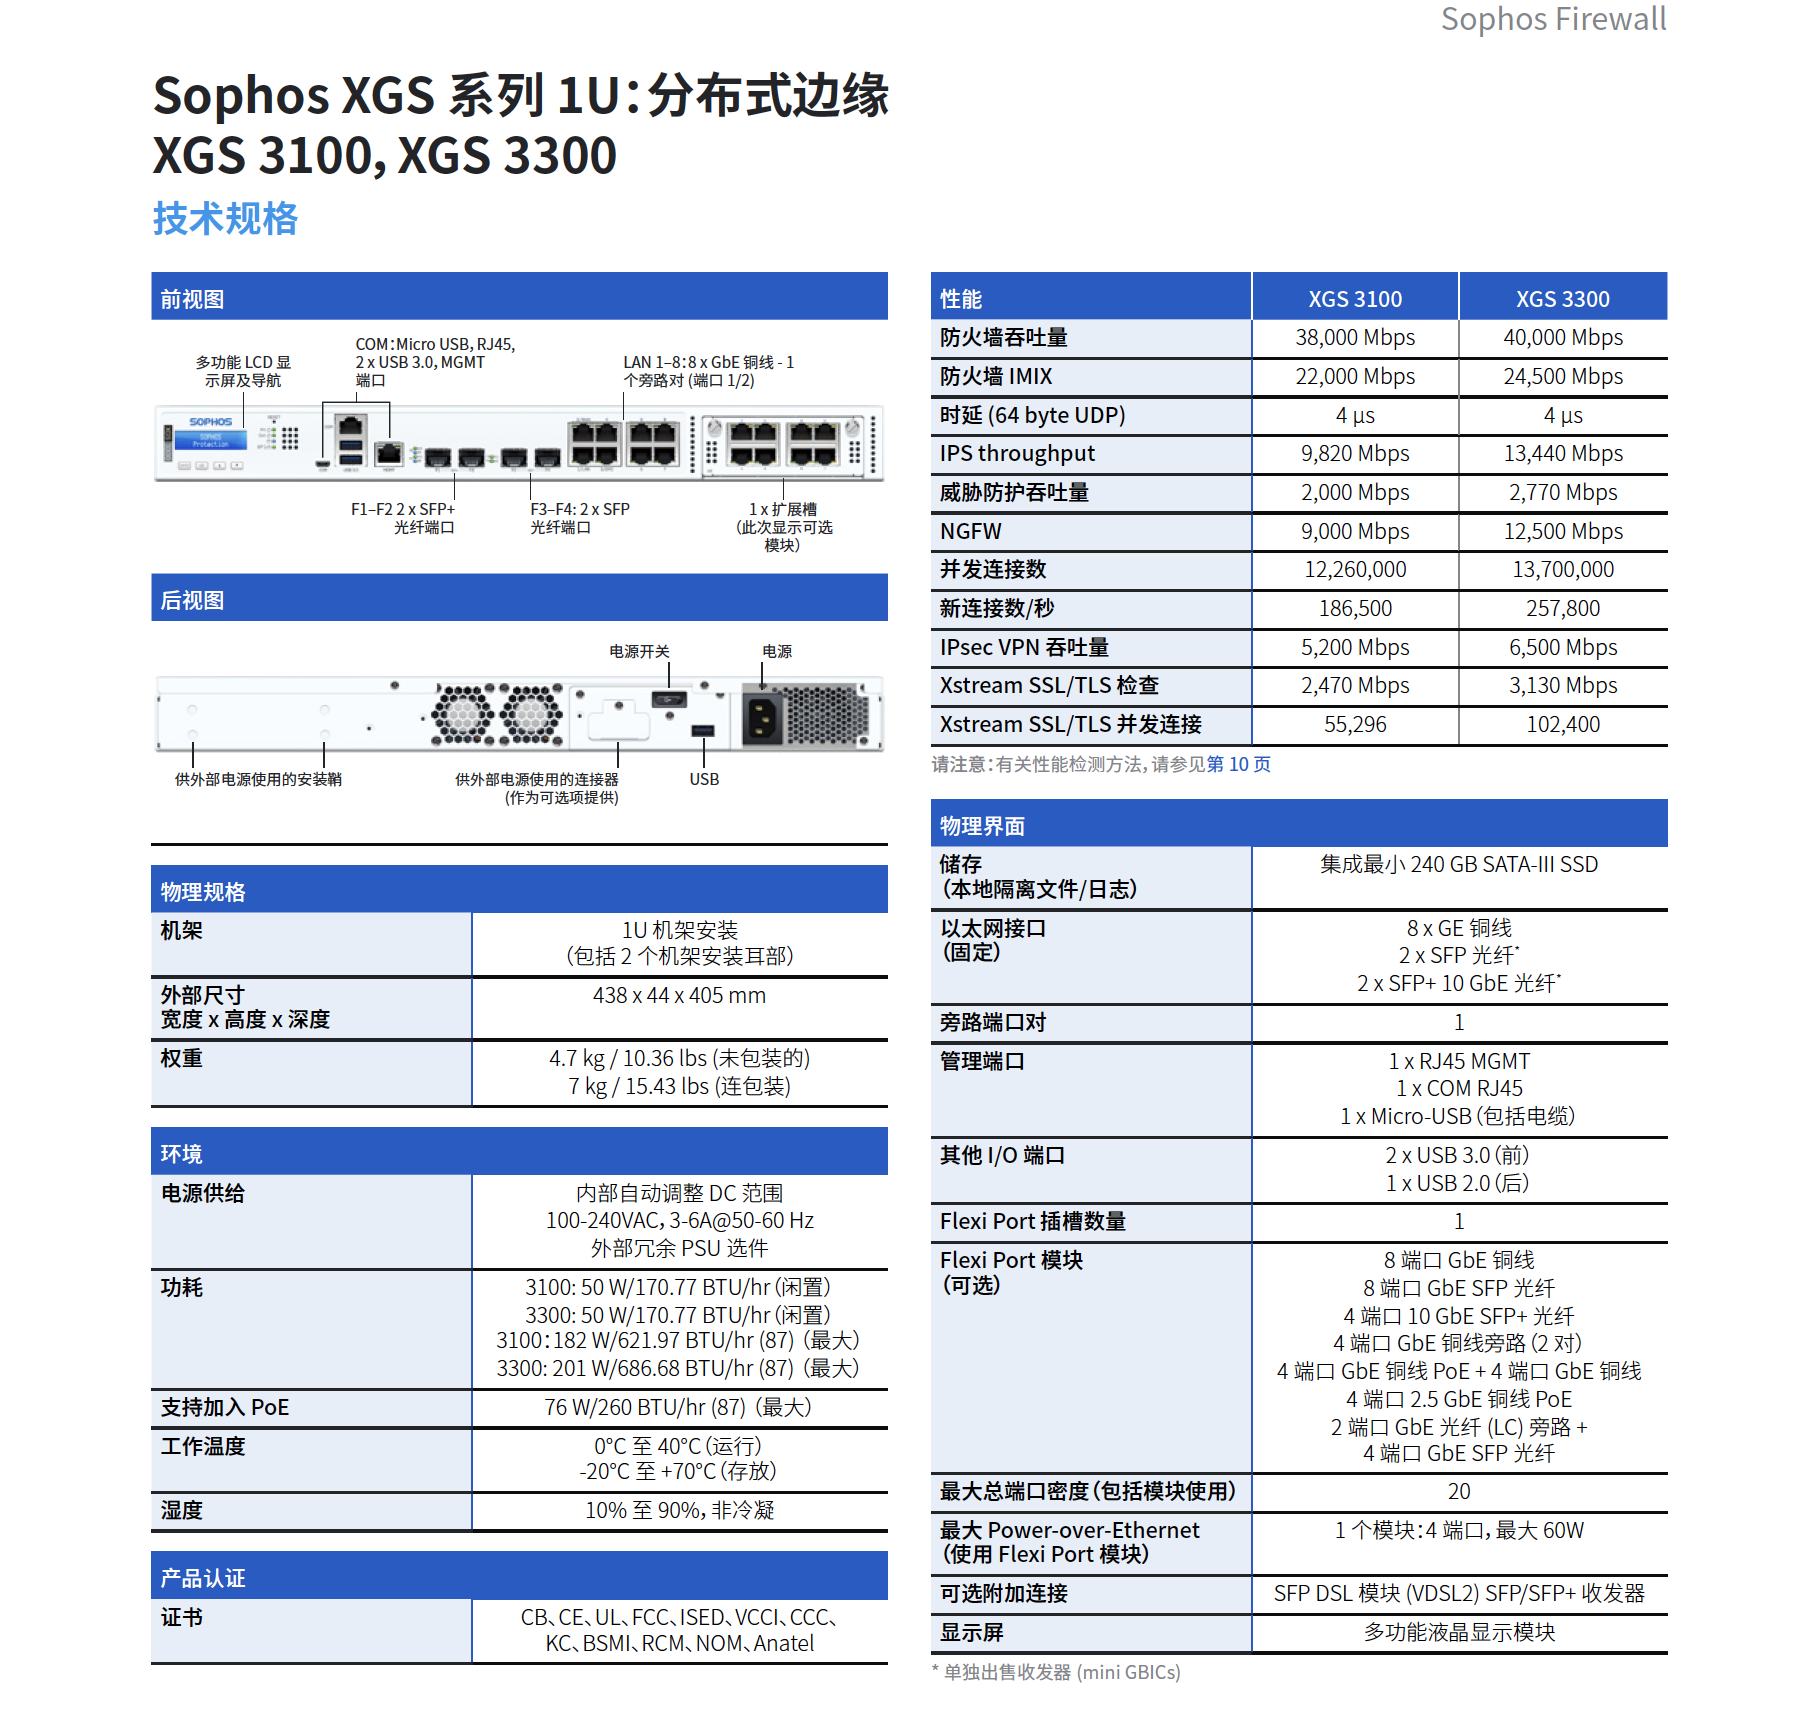 Sophos 3300、Sophos XGS3300、Sophos XGS 3300、Sophos X-NWP3300、Sophos X-WBP3300、Sophos X-ZDP3300 、Sophos X-CORCH3300、Sophos X-EMP3300、Sophos X-WSP3300、Sophos X-ESUP3300、